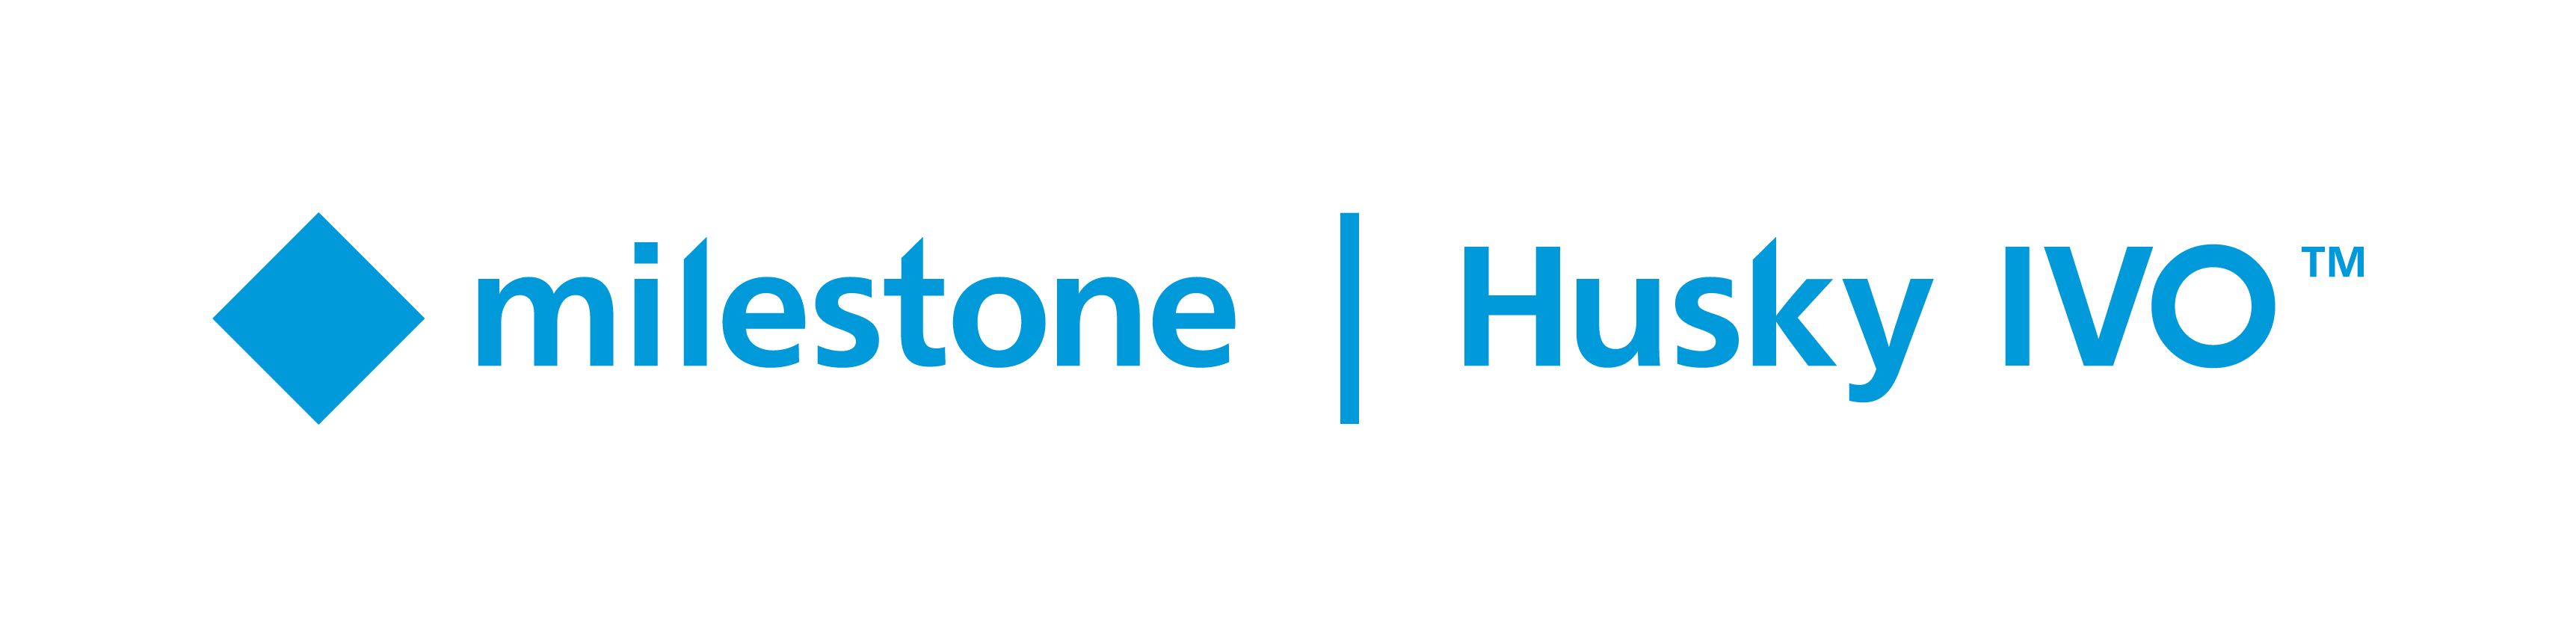 Milestone Husky IVO Logo - Clear Blue